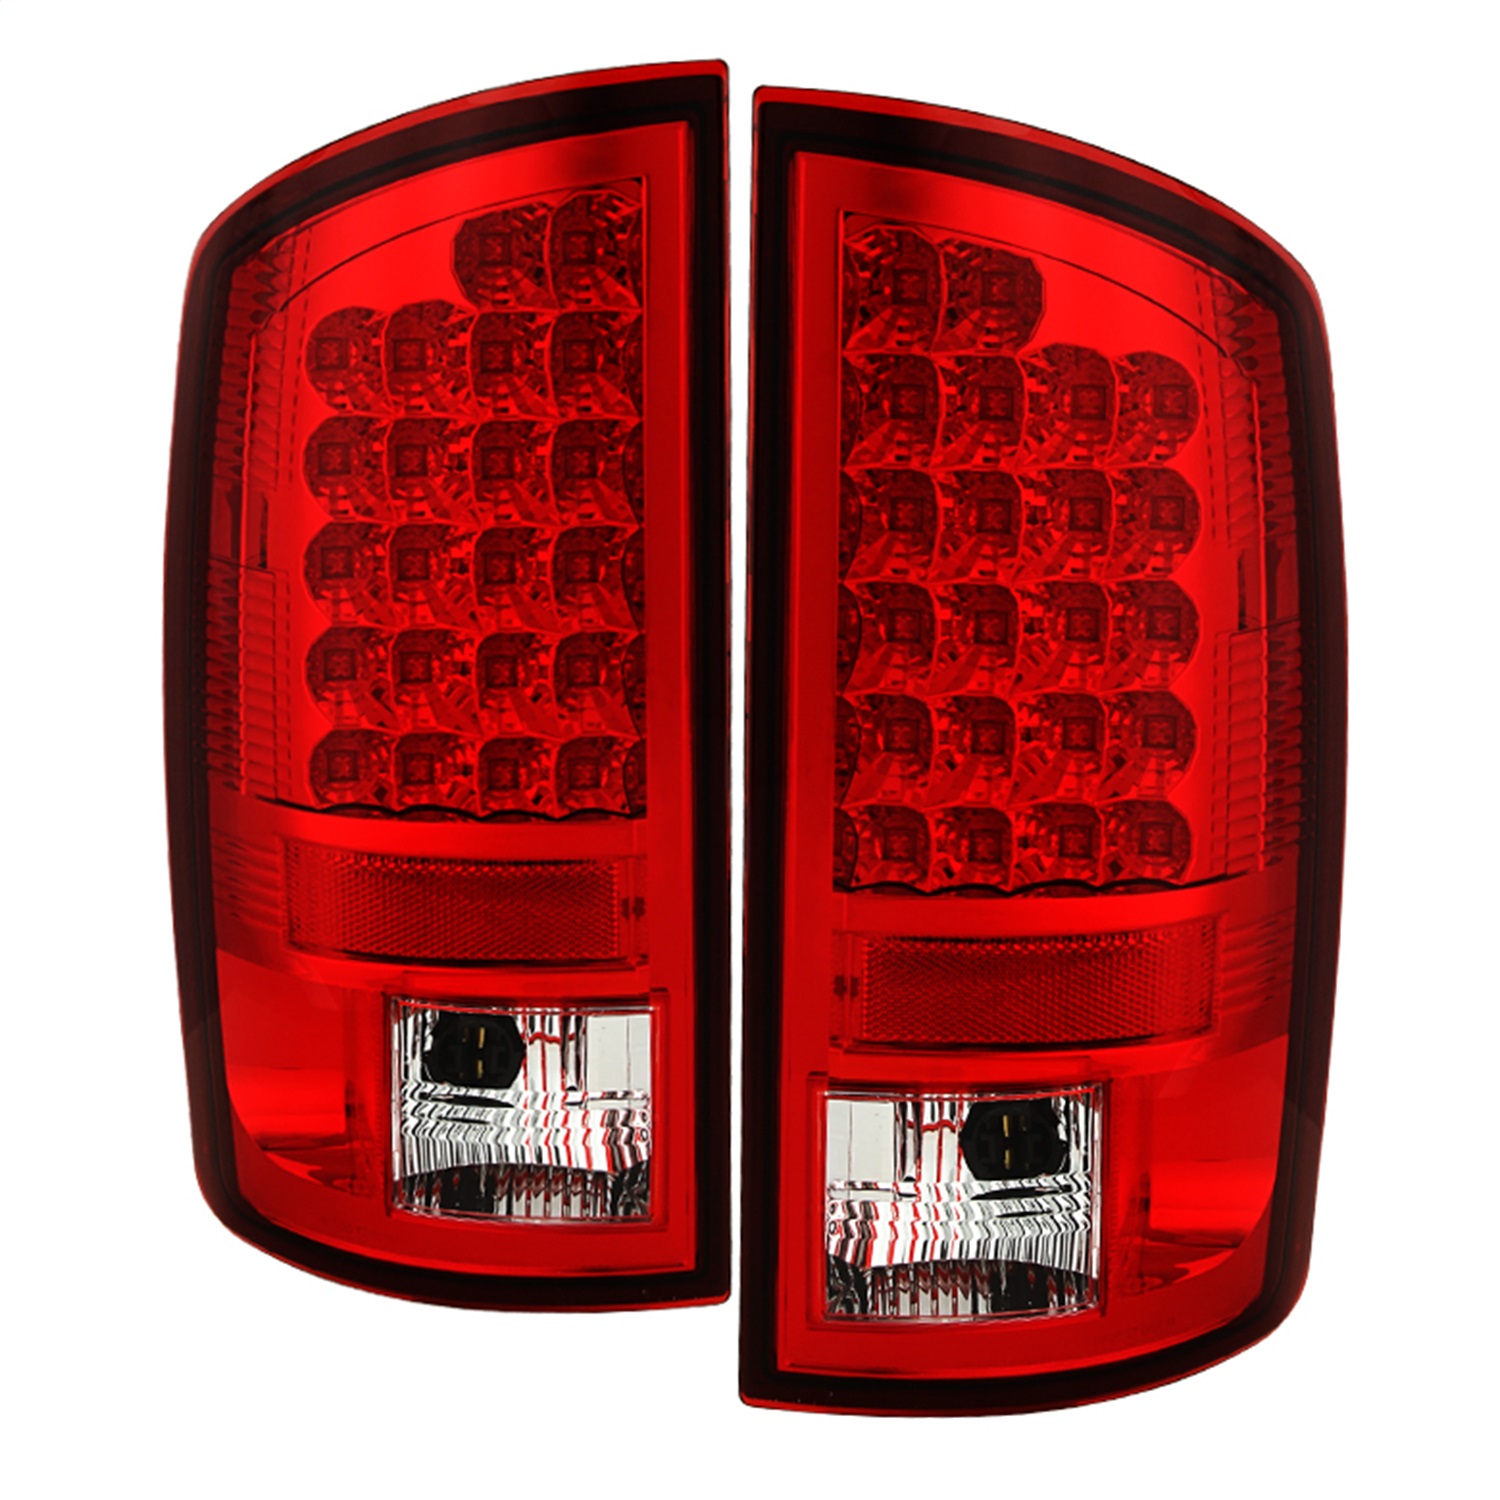 Spyder Auto 5002570 LED Tail Lights Fits 02-06 Ram 1500 Ram 2500 Ram 3500